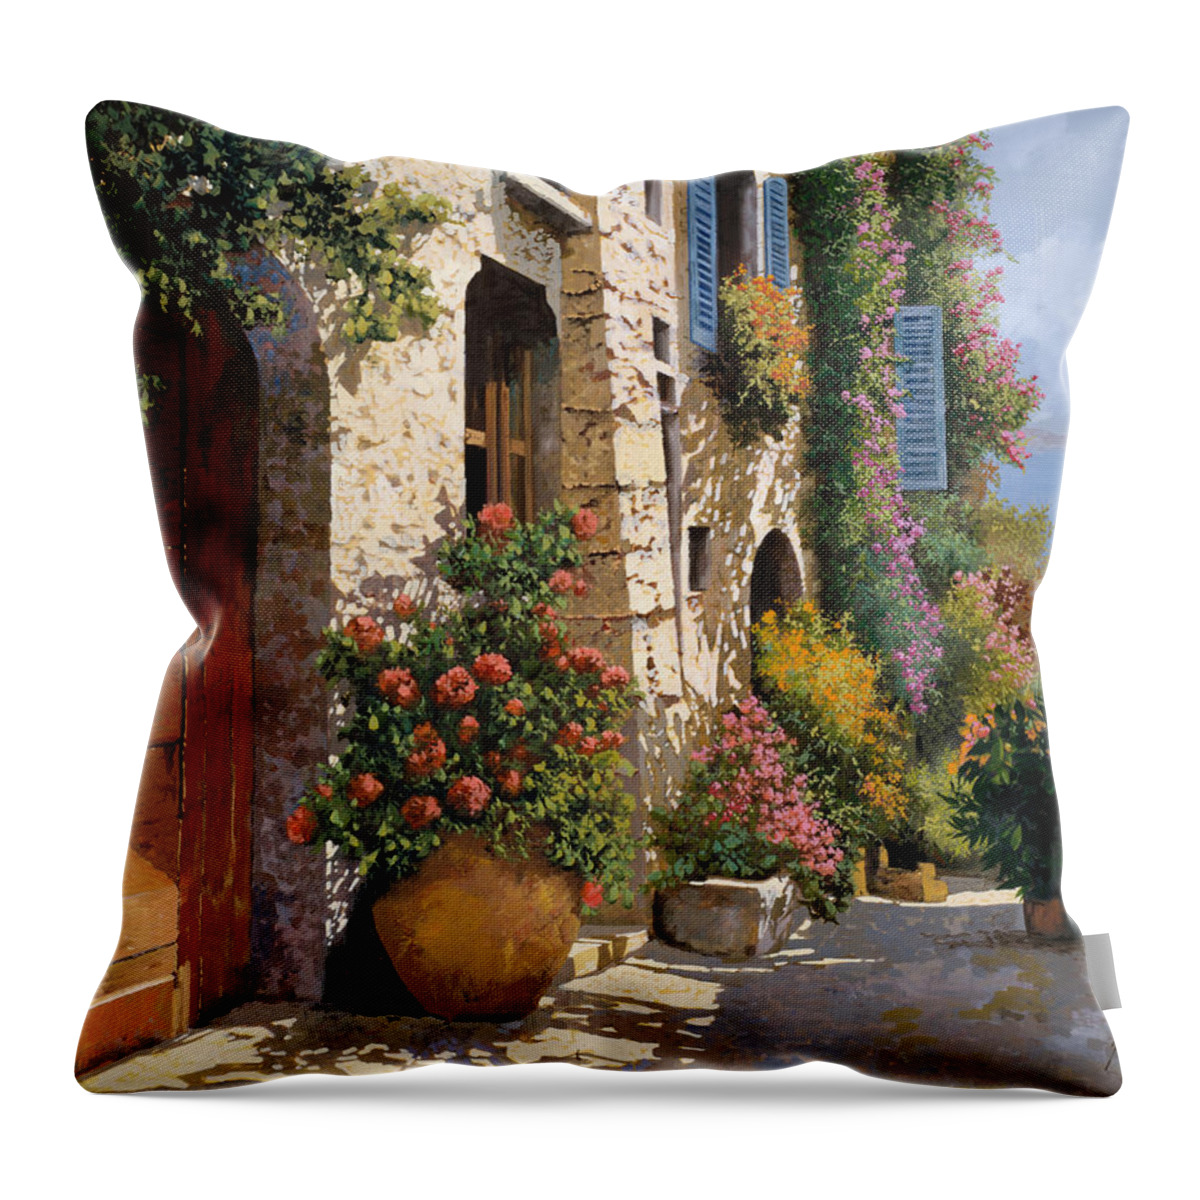 Street Scene Throw Pillow featuring the painting La Strada Piu' Bella by Guido Borelli